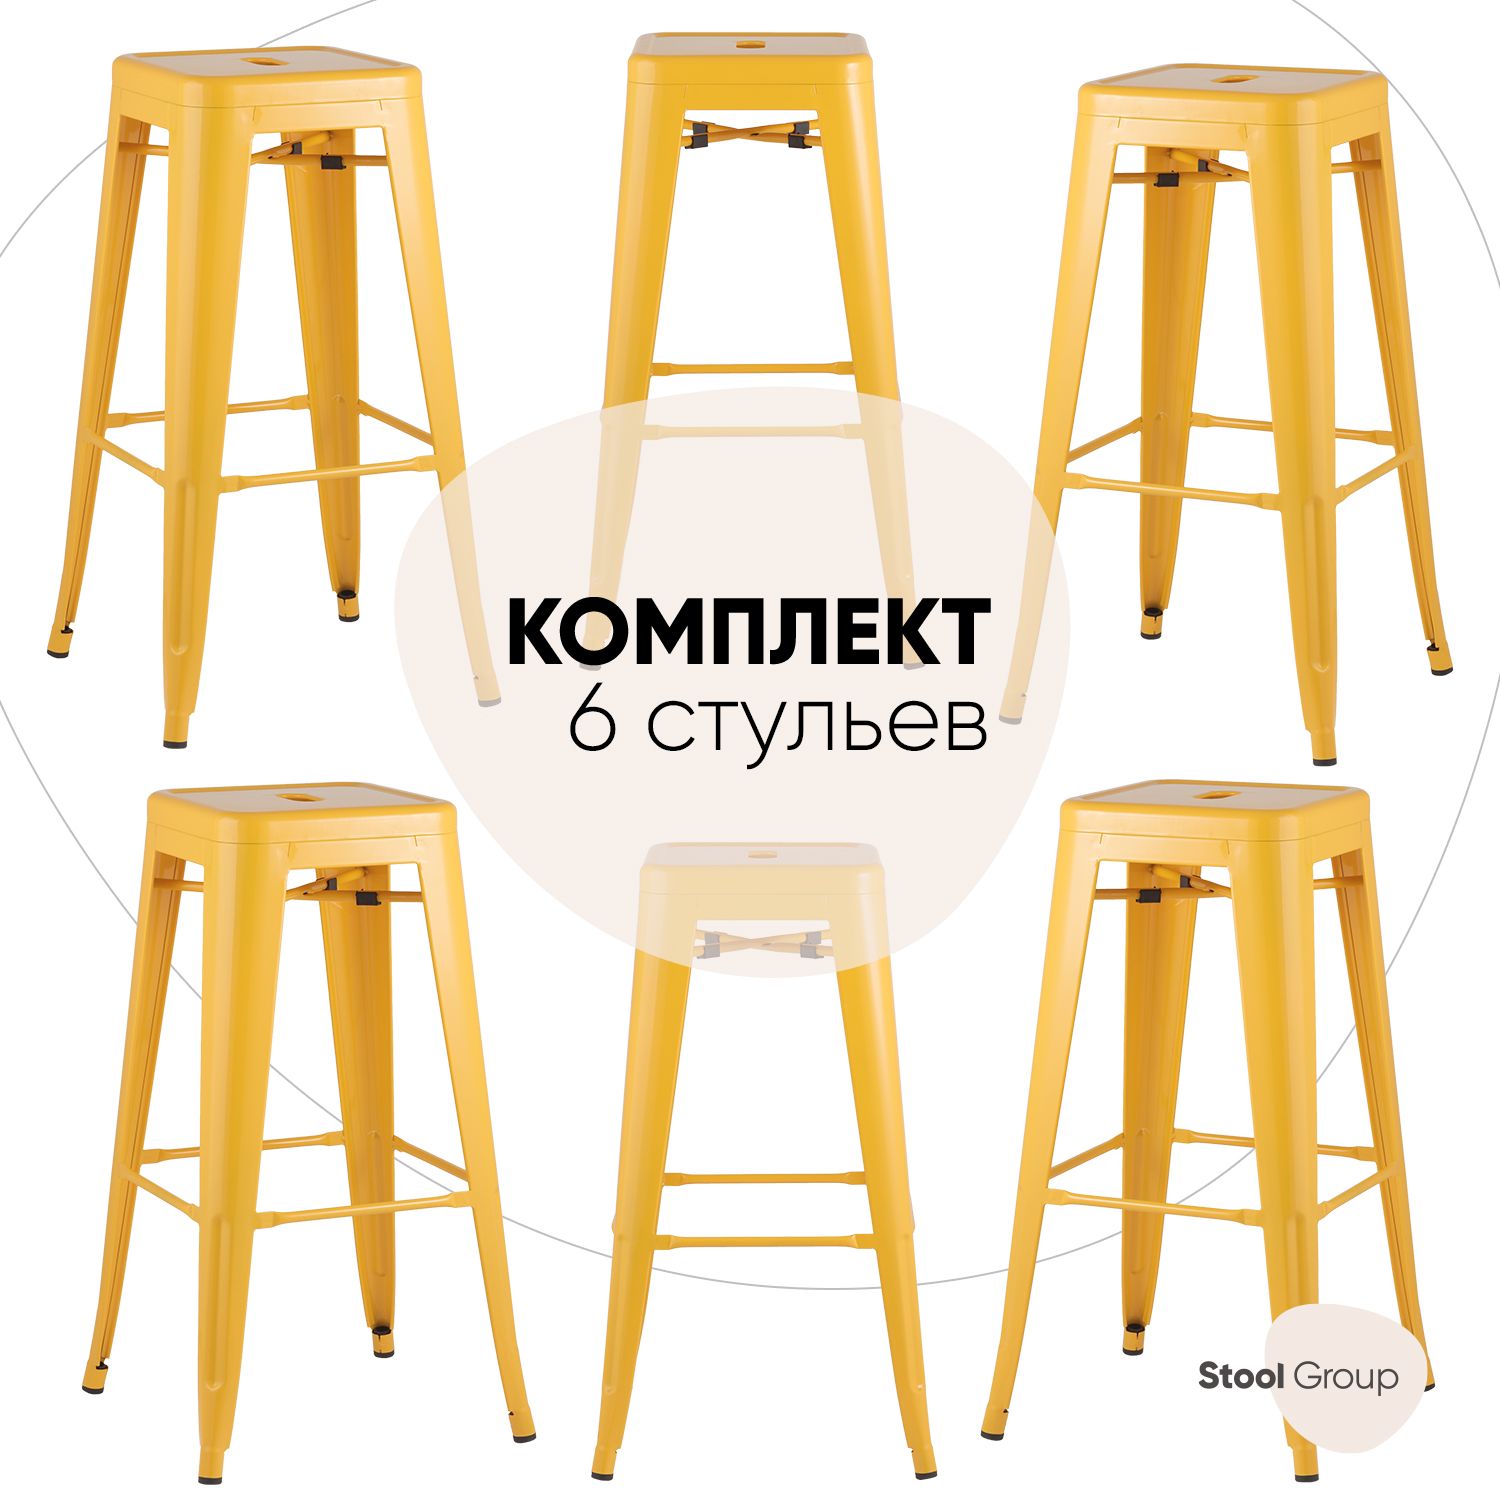 фото Стул барный stool group tolix желтый глянцевый (комплект 6 стульев)